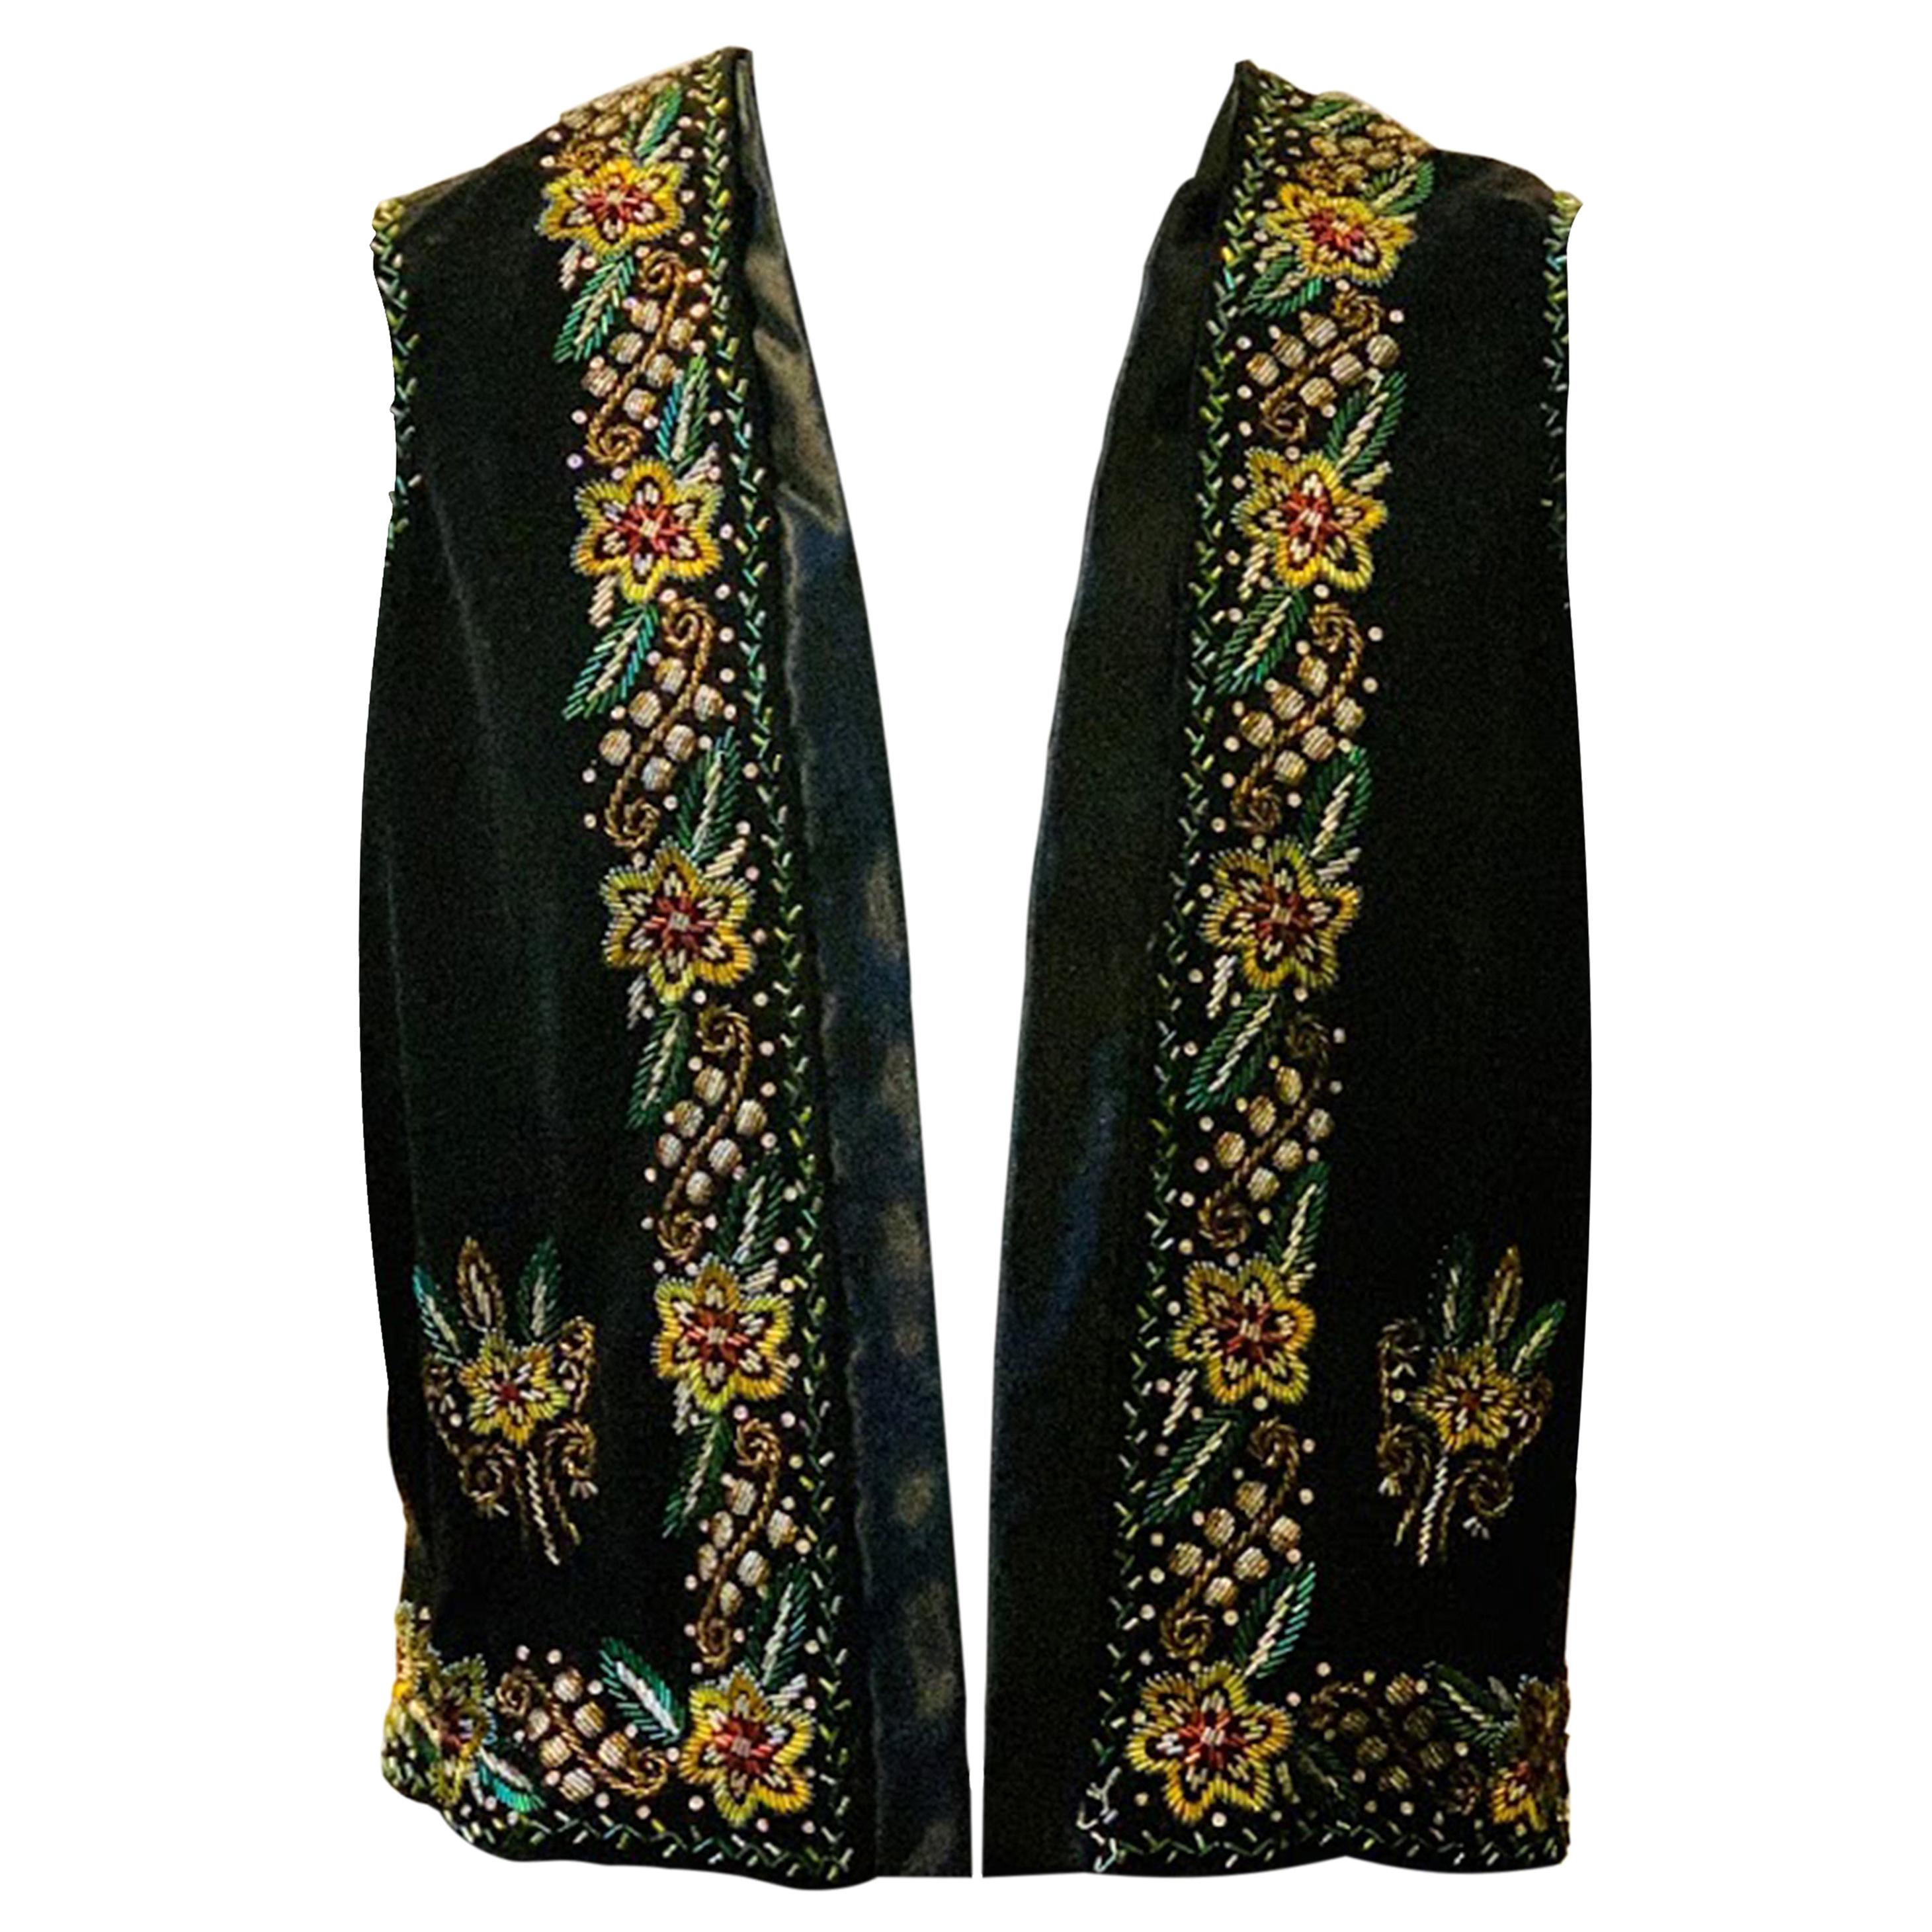 Hungarian Vintage 60s Elaborate Embroided Waistcoat